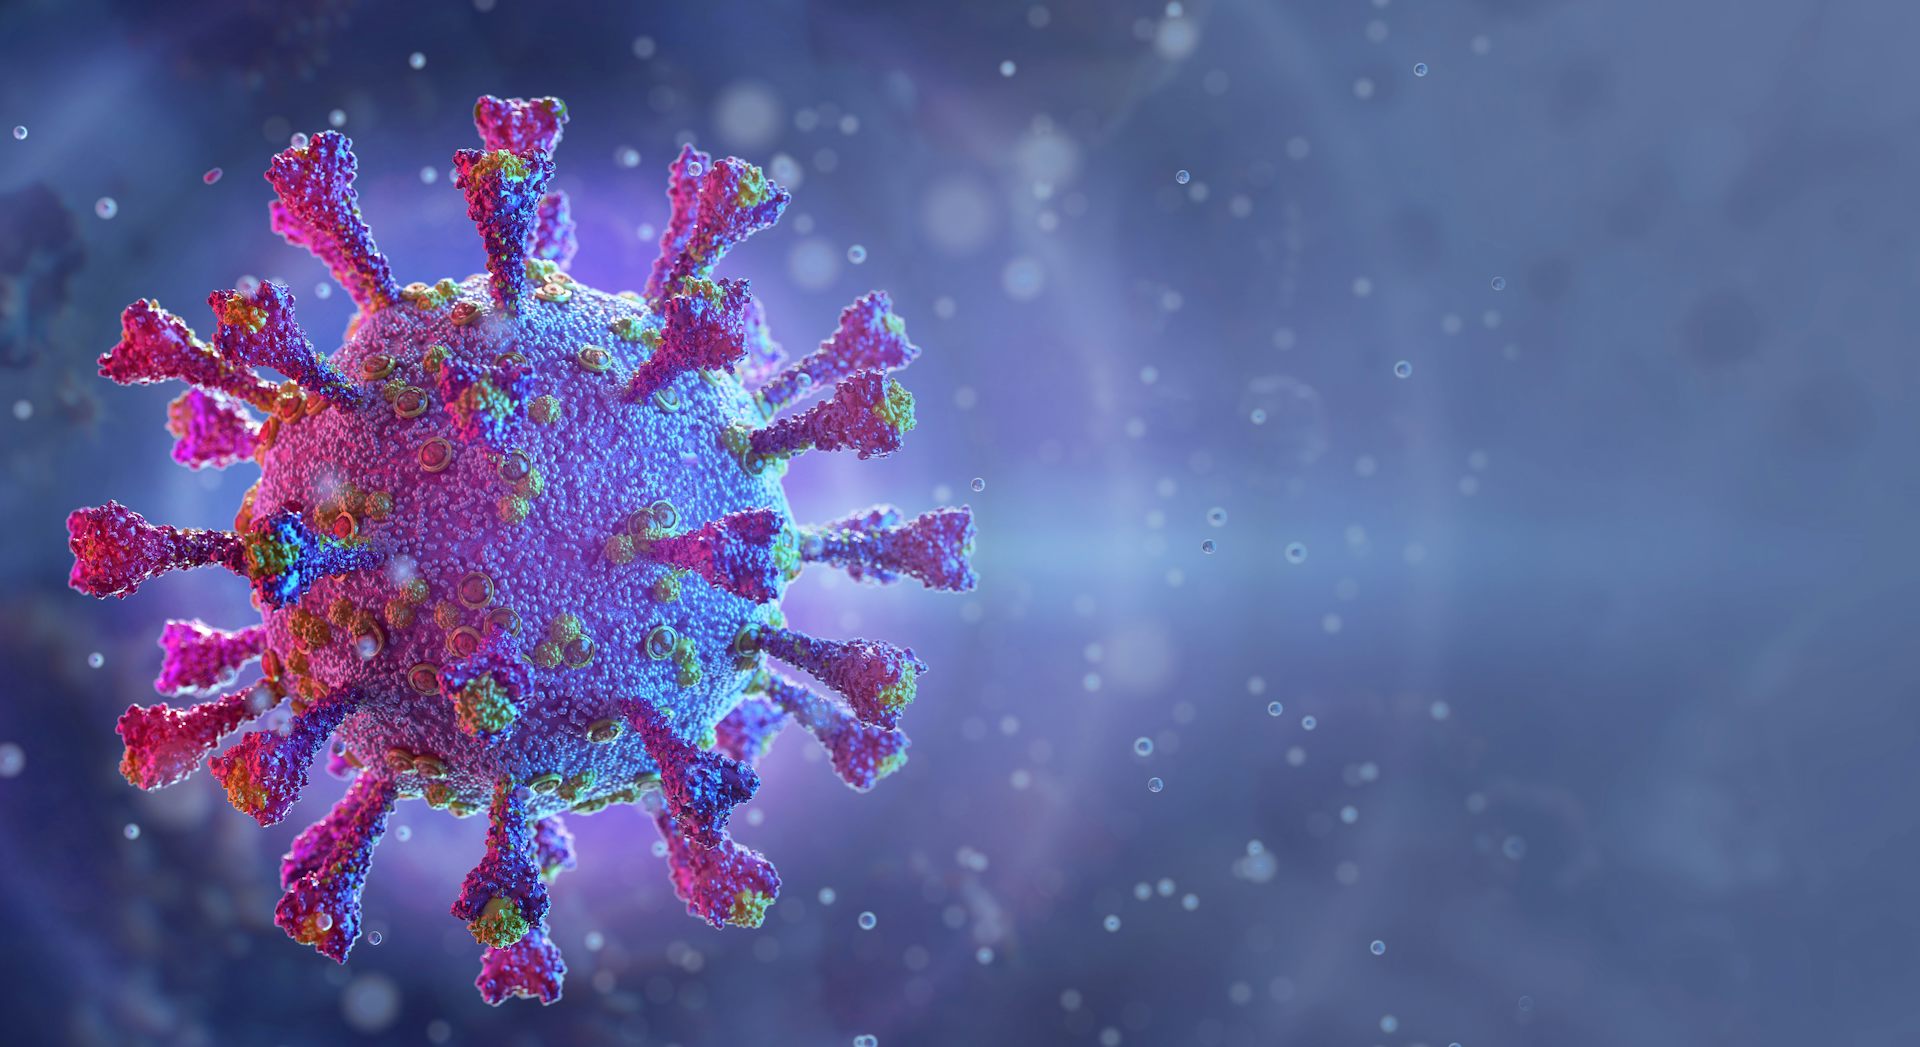 Coronavirus: Where Do New Viruses Come From?